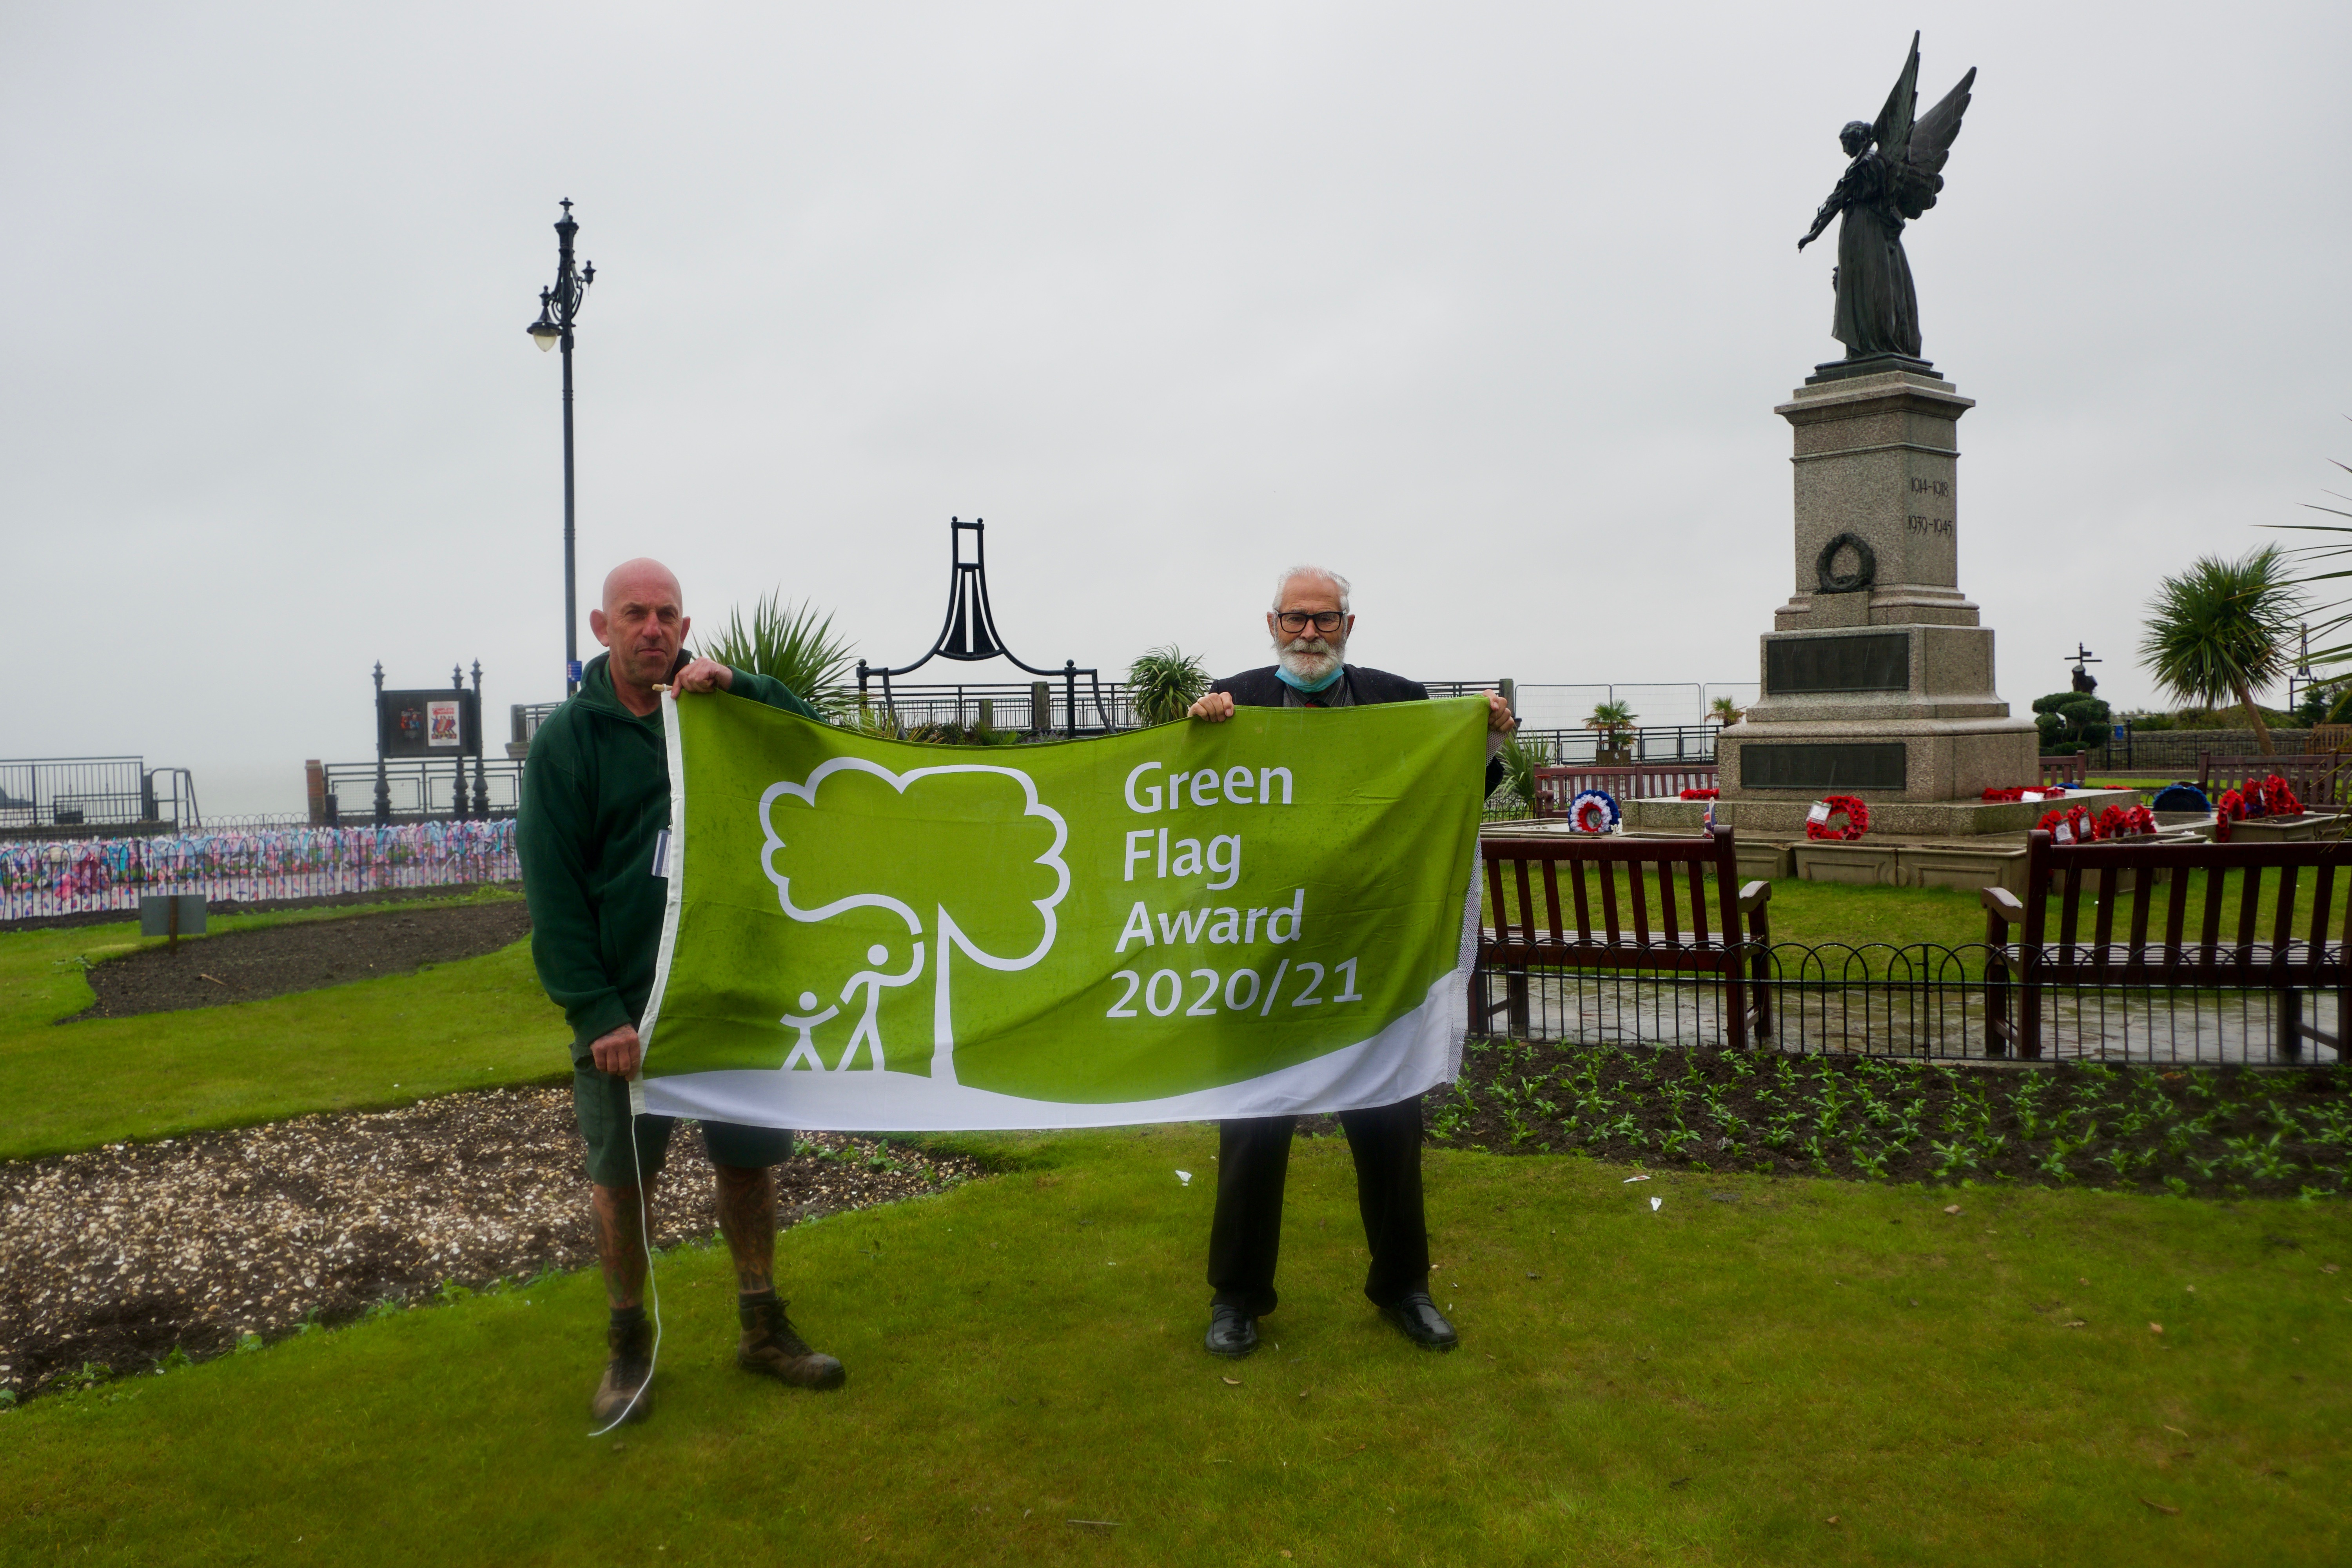 Clacton 2020/21 Seafront Green Flag Award